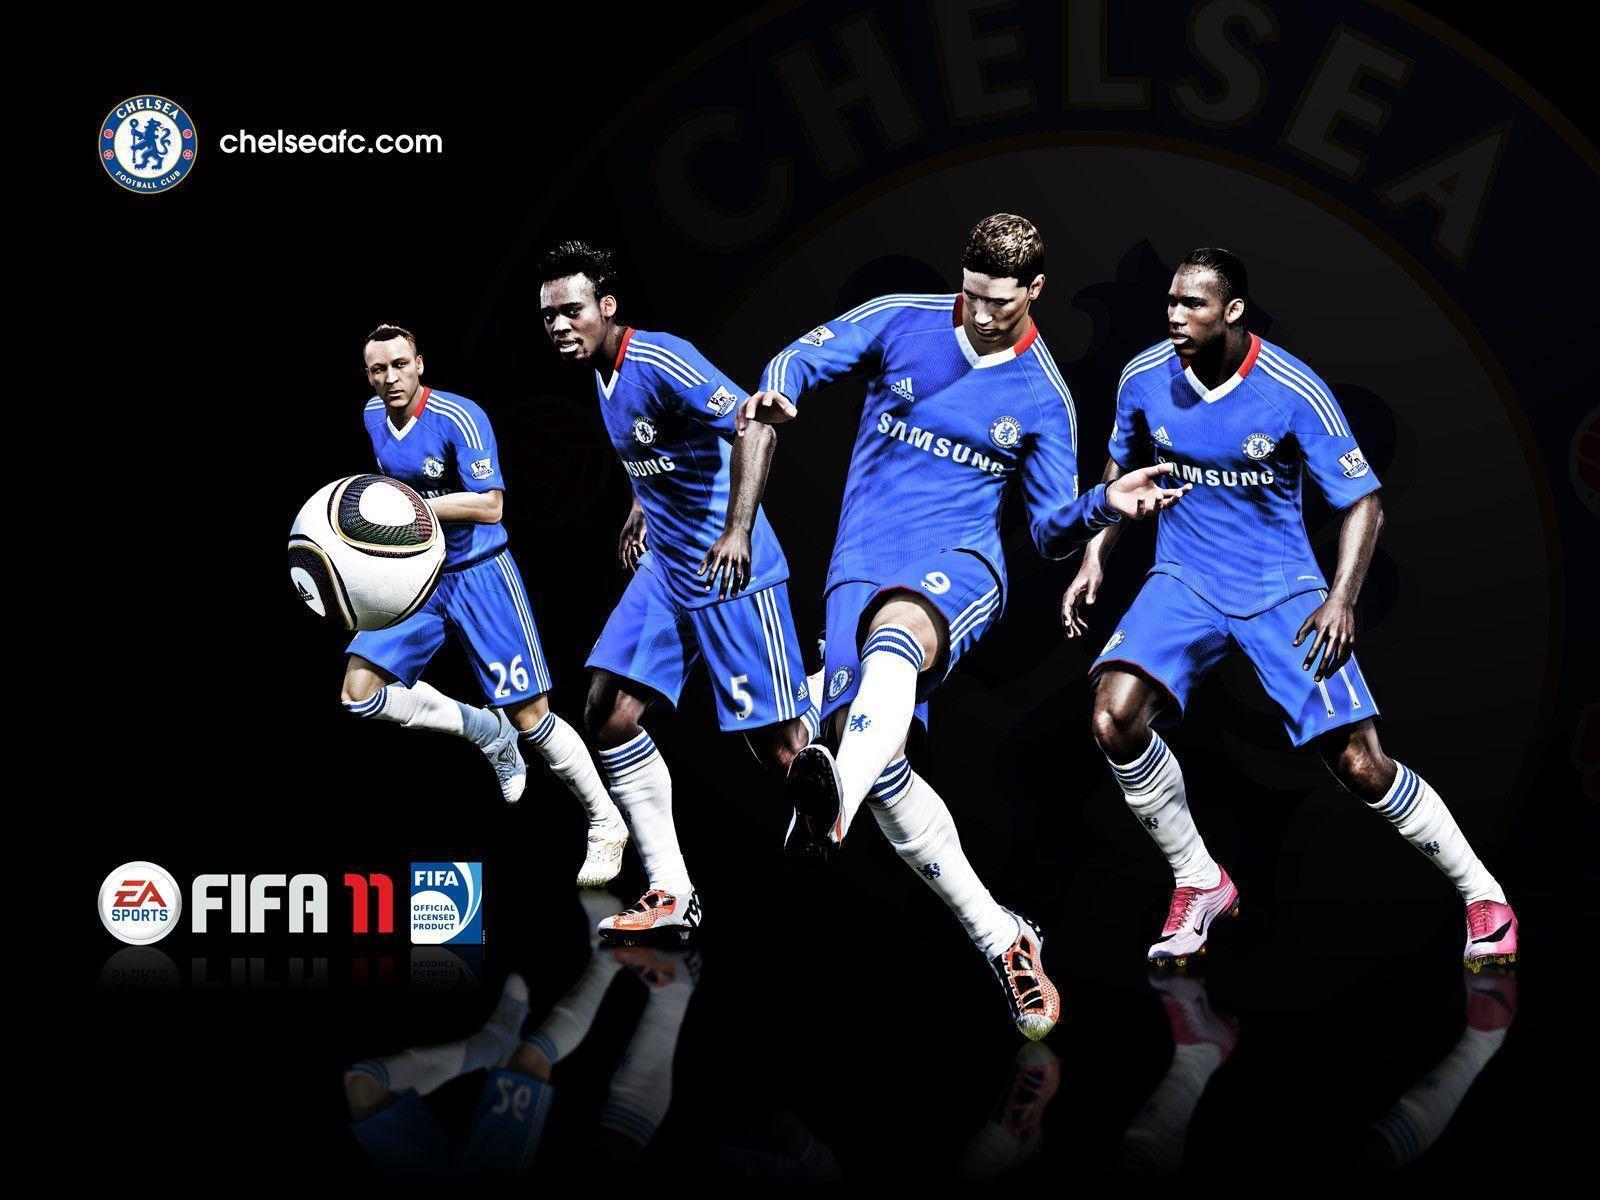 Excellent Wallpaper HD Chelsea Fc Logo Football Club 1600x1200PX